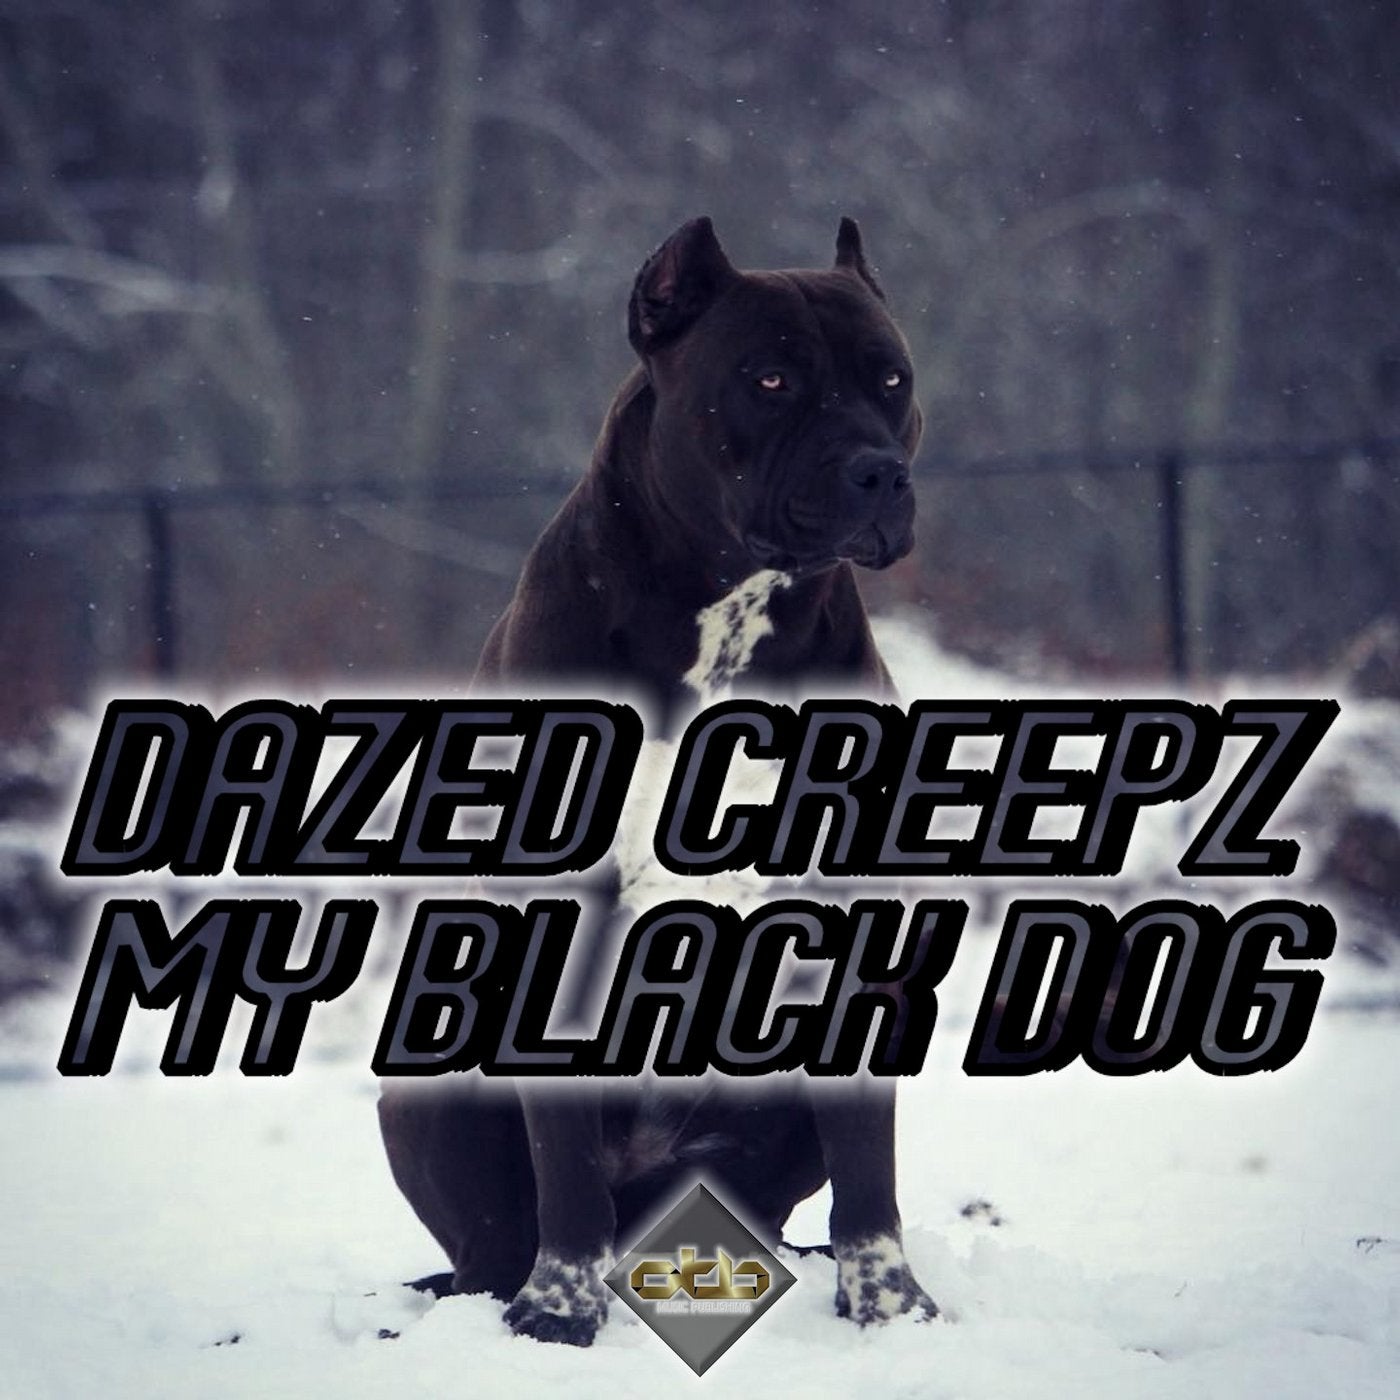 My Black Dog